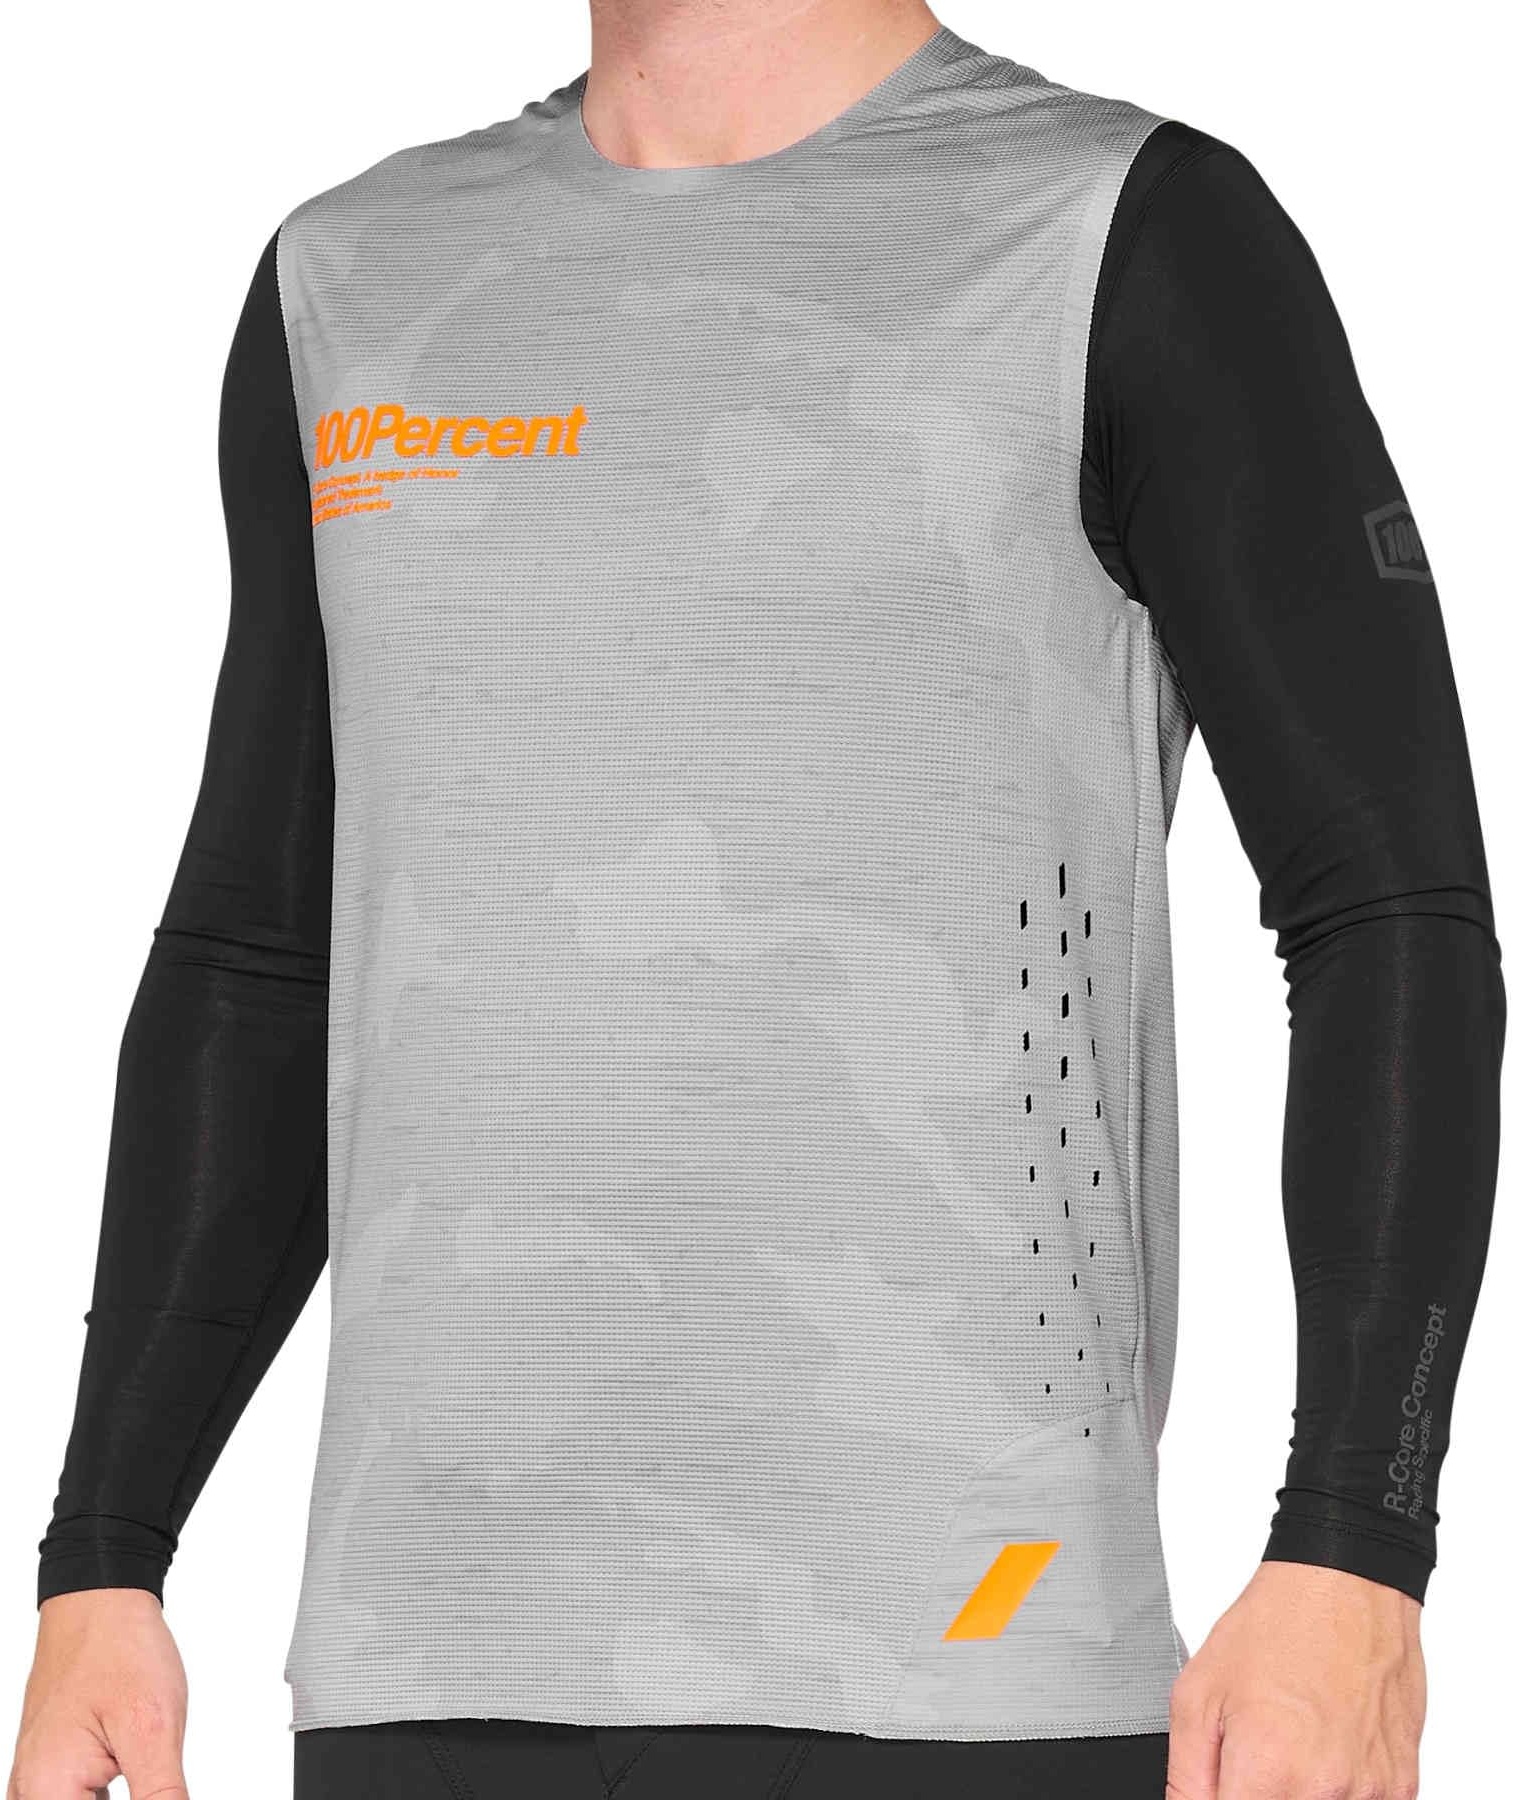 100% MTB WEAR Unisex-Erwachsene R-core Concept Sleeveless Jersey Camouflage-L T-Shirt, Grau, Tarnfarbe (grau), L